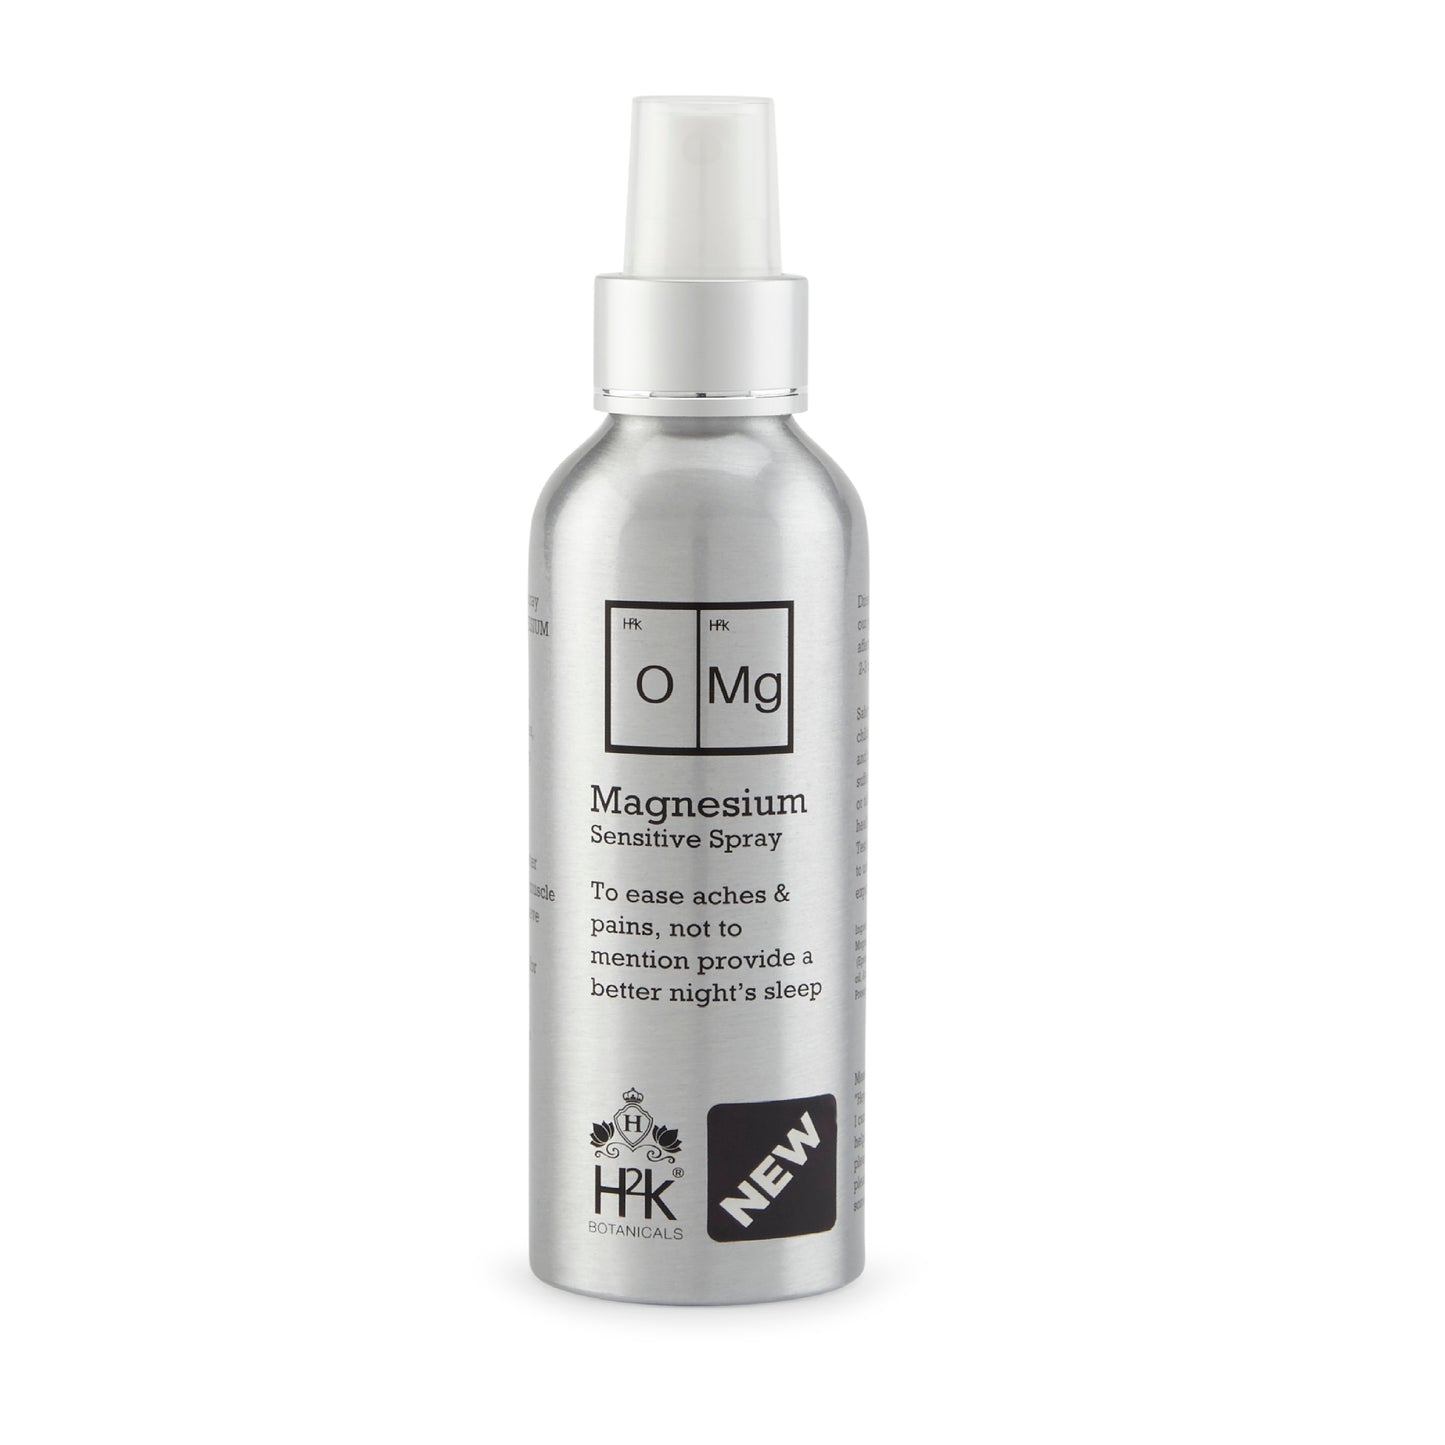 Magnesium Sensitive Spray 500ml Refill OMG.